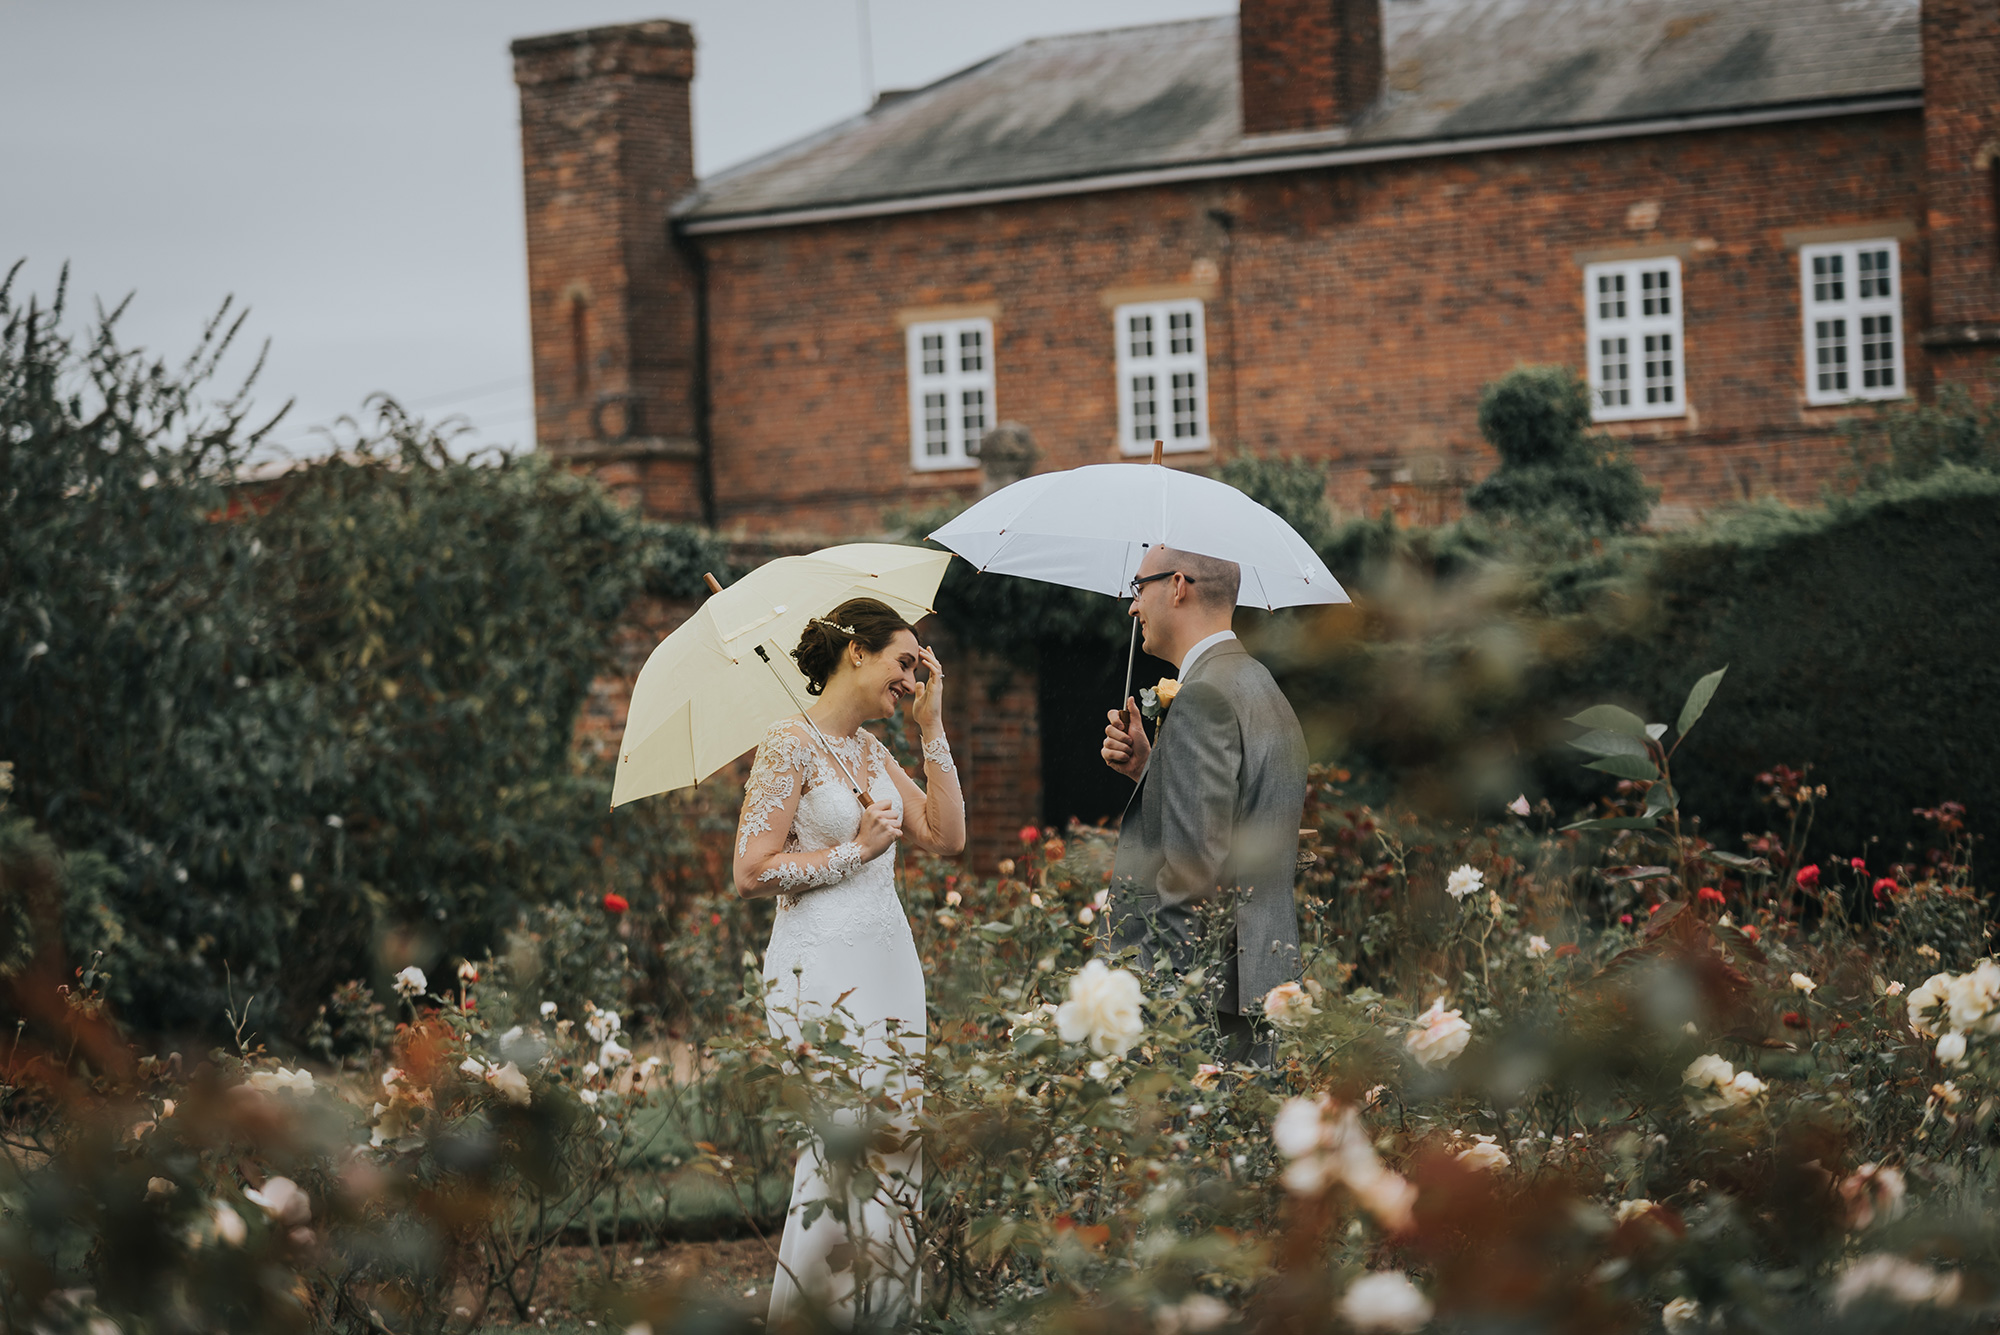 Elyssa_Lewis_Classic-Intimate-Wedding_Sean-Wood-Photography_029